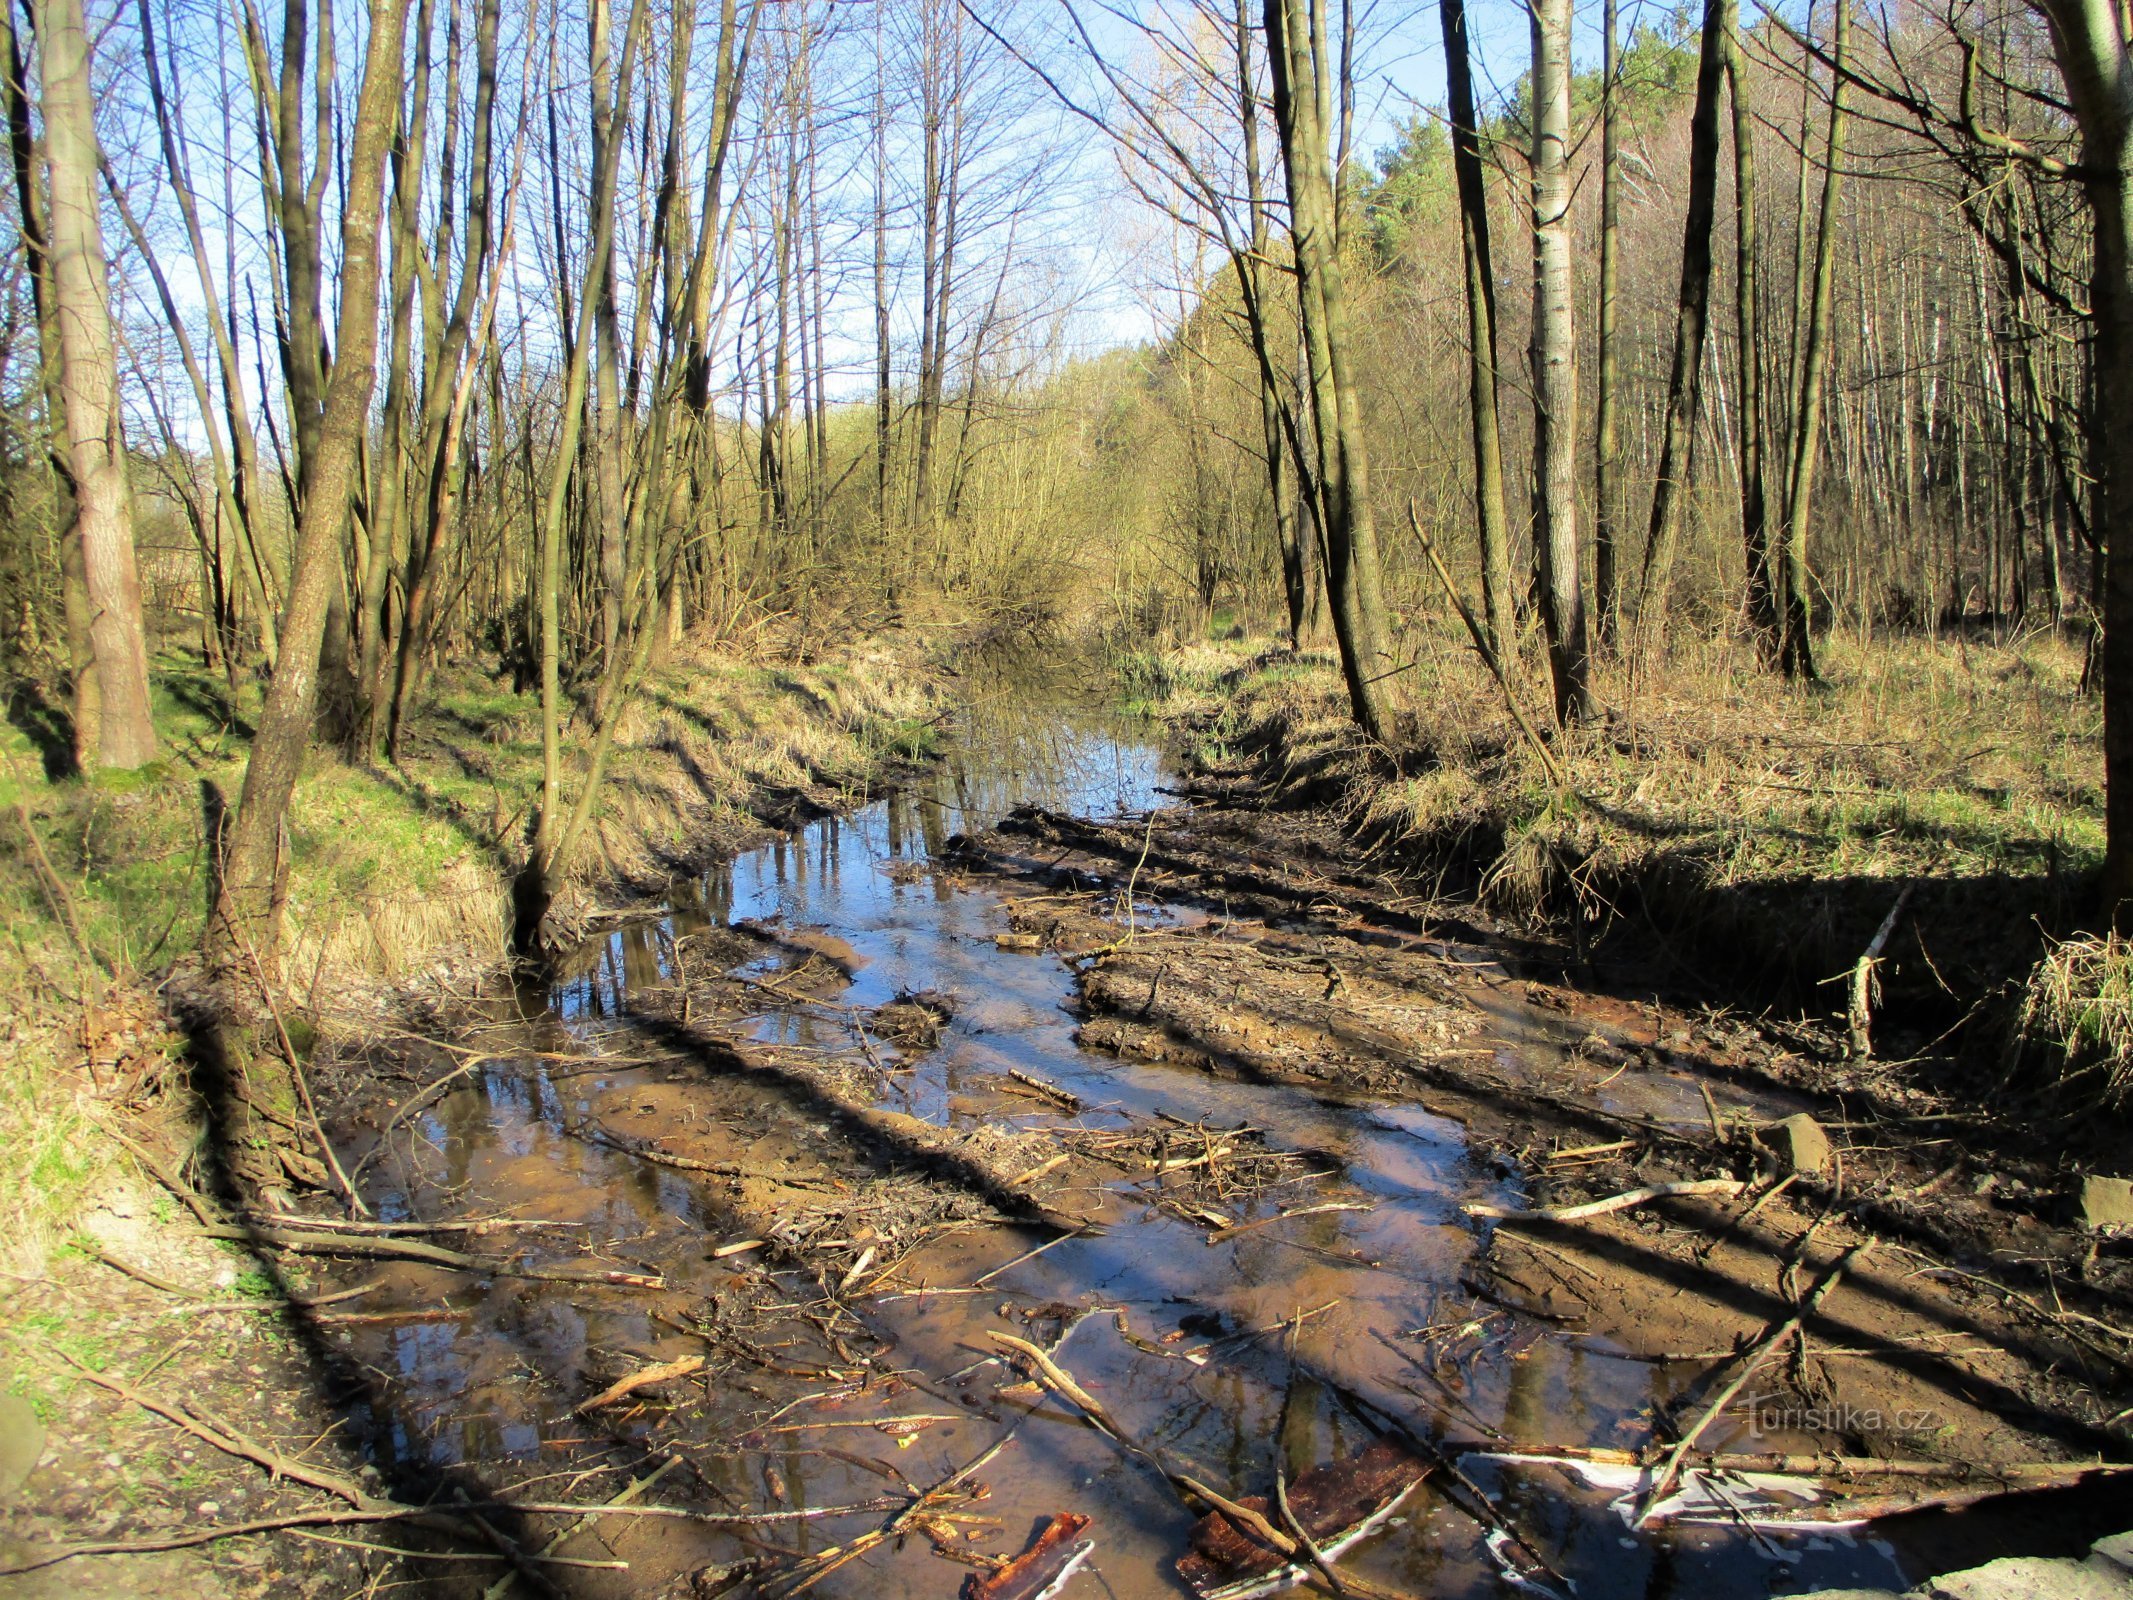 Le ruisseau Biřička avant d'entrer dans l'étang du même nom (Nový Hradec Králové, 8.4.2020 avril XNUMX)